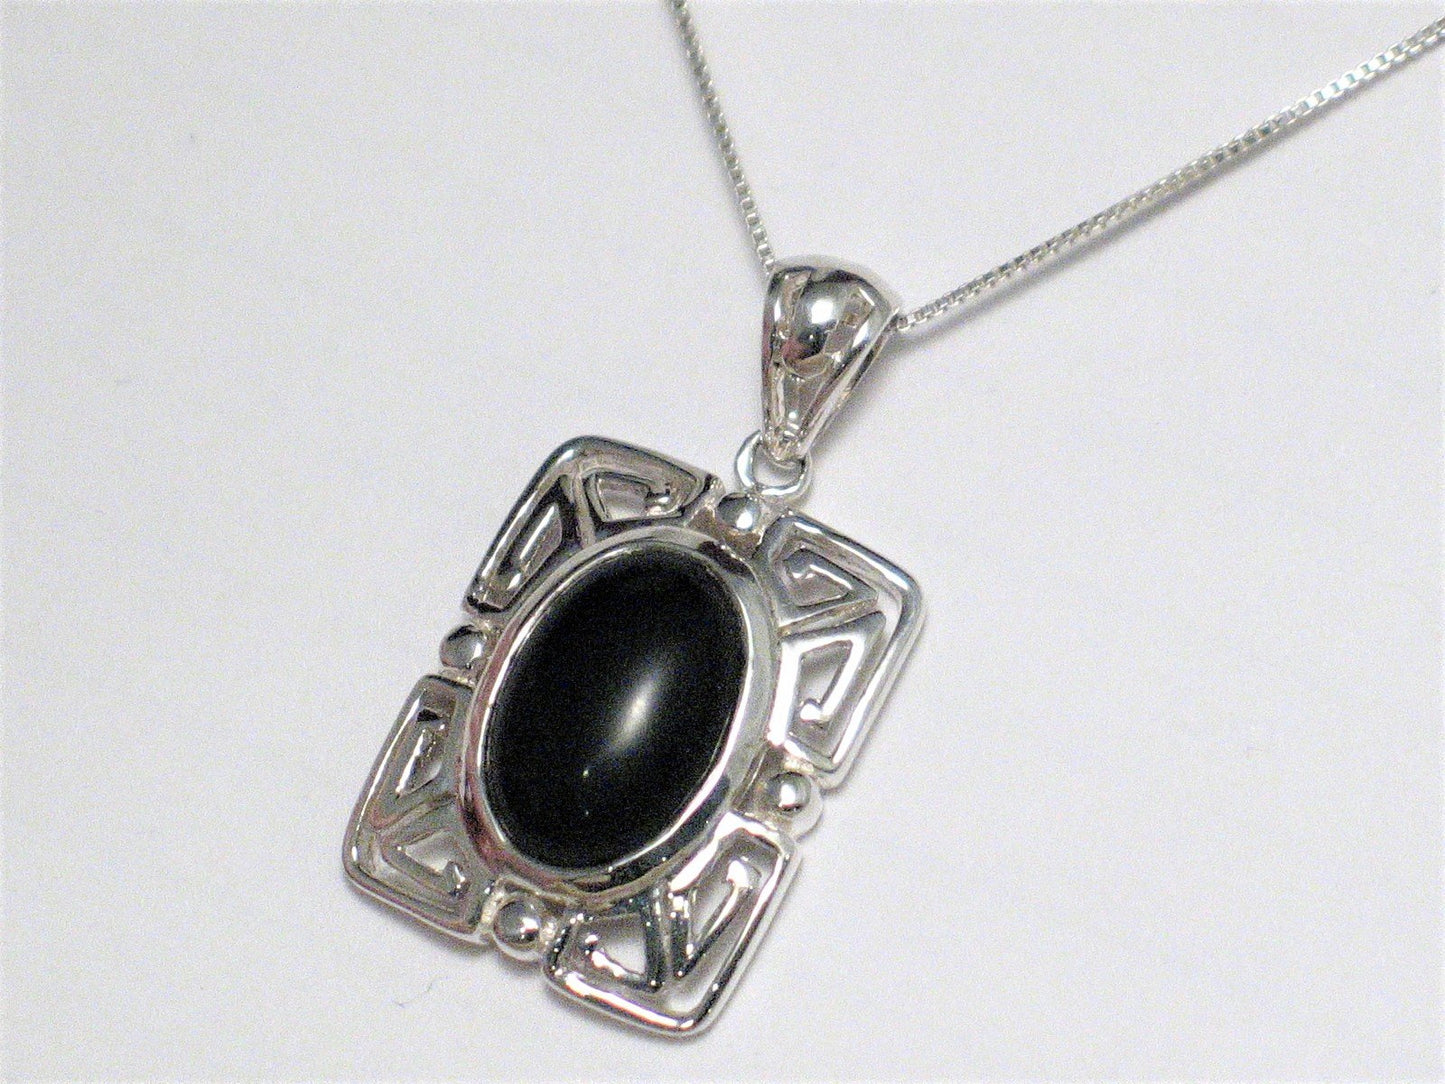 Back in Black | Sterling Silver Necklace Pendant set w/ Black Onyx Stone 18" - Blingschlingers Jewelry